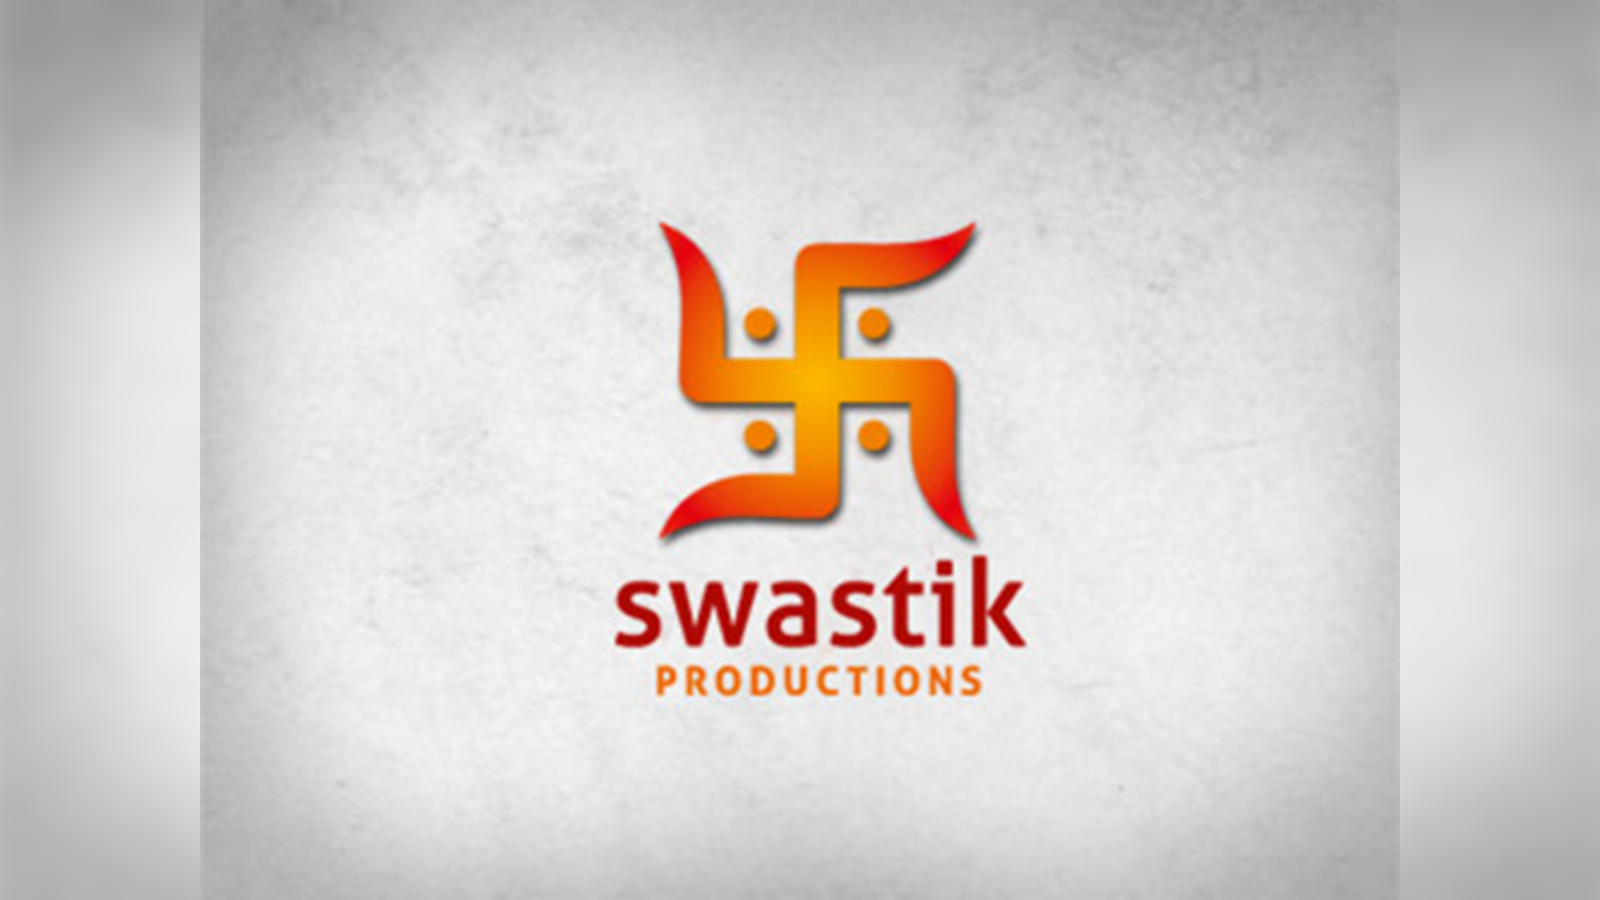 Swastik Logo Images, HD Pictures For Free Vectors Download - Lovepik.com